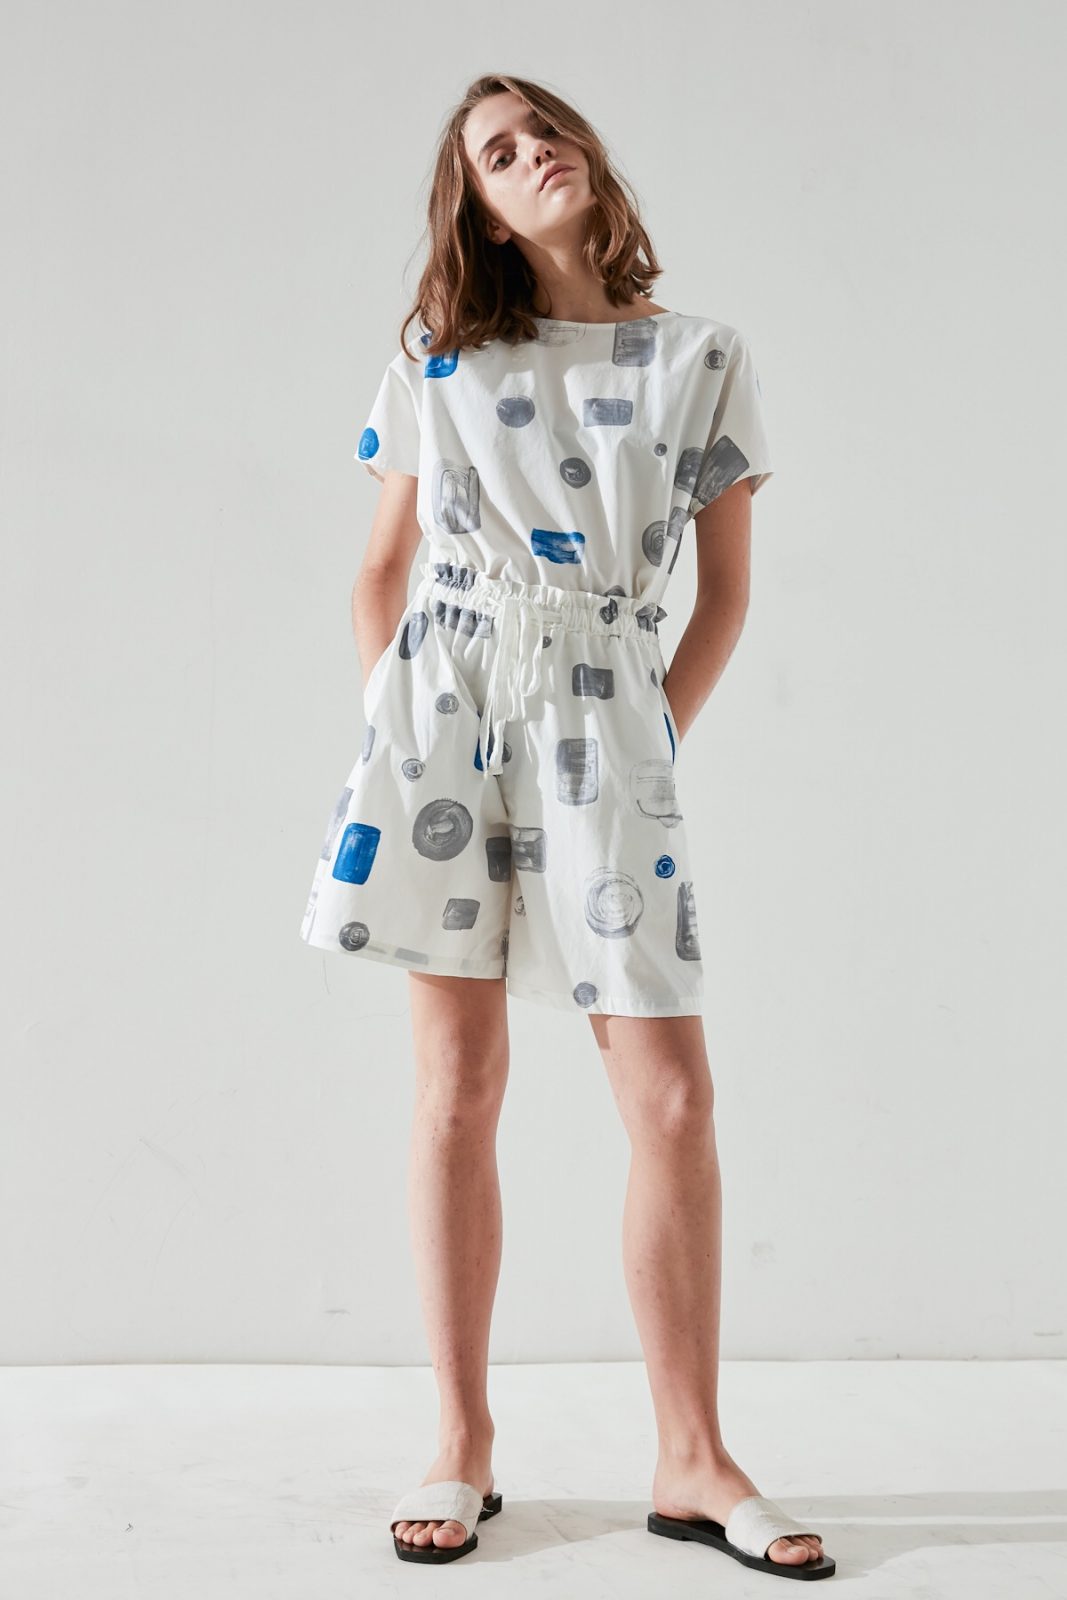 SKYE modern minimalist women clothing fashion Isla custom print top blue